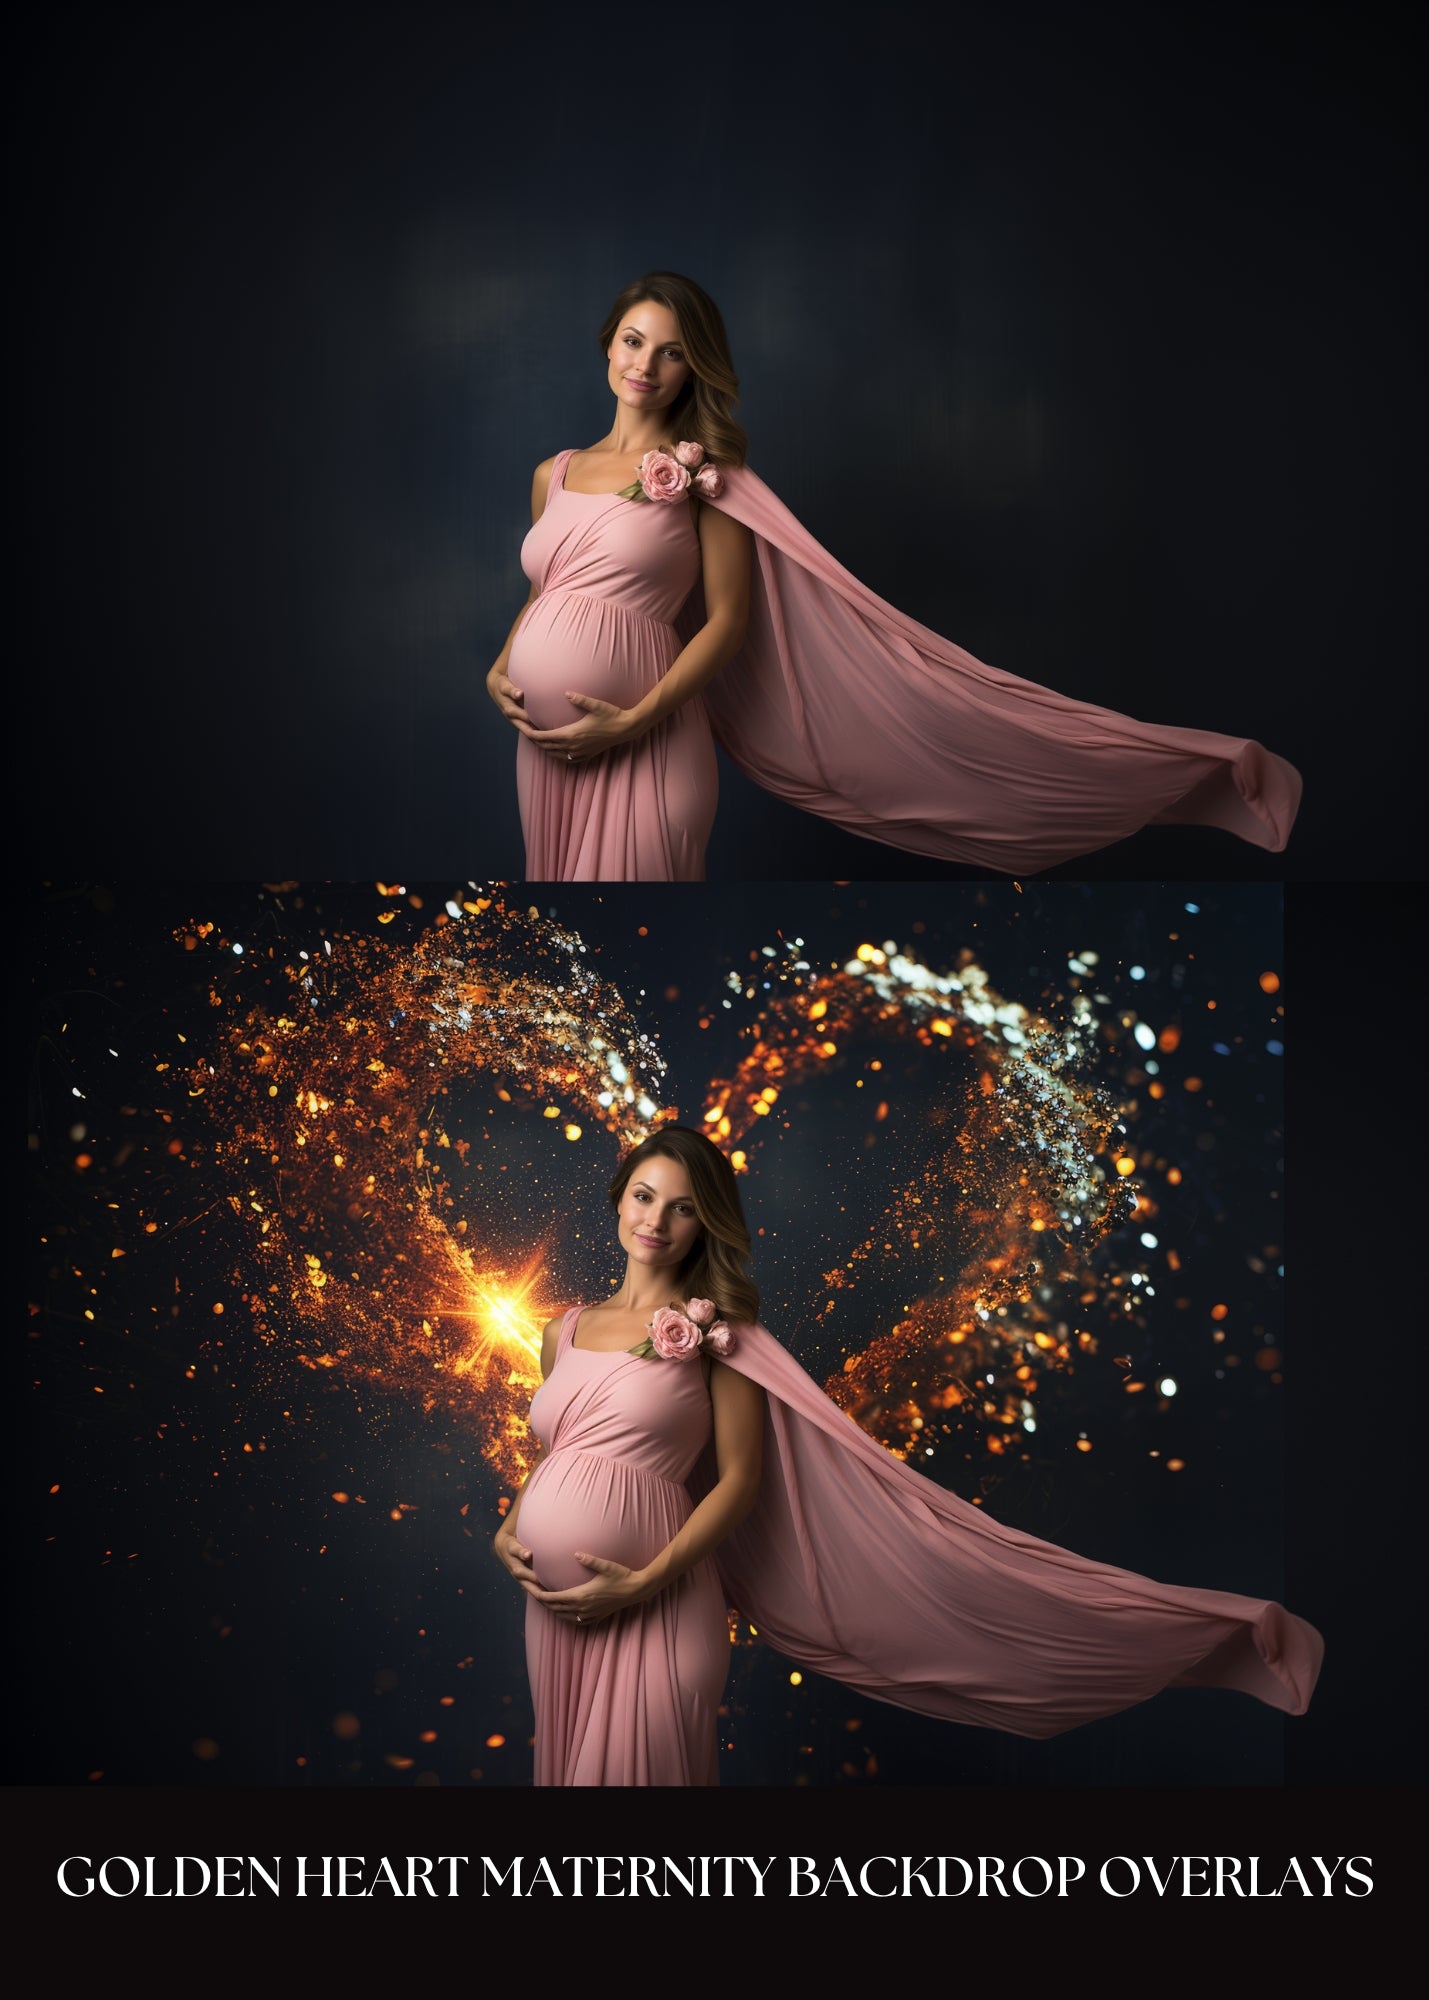 Golden Heart Maternity Backdrop Overlays